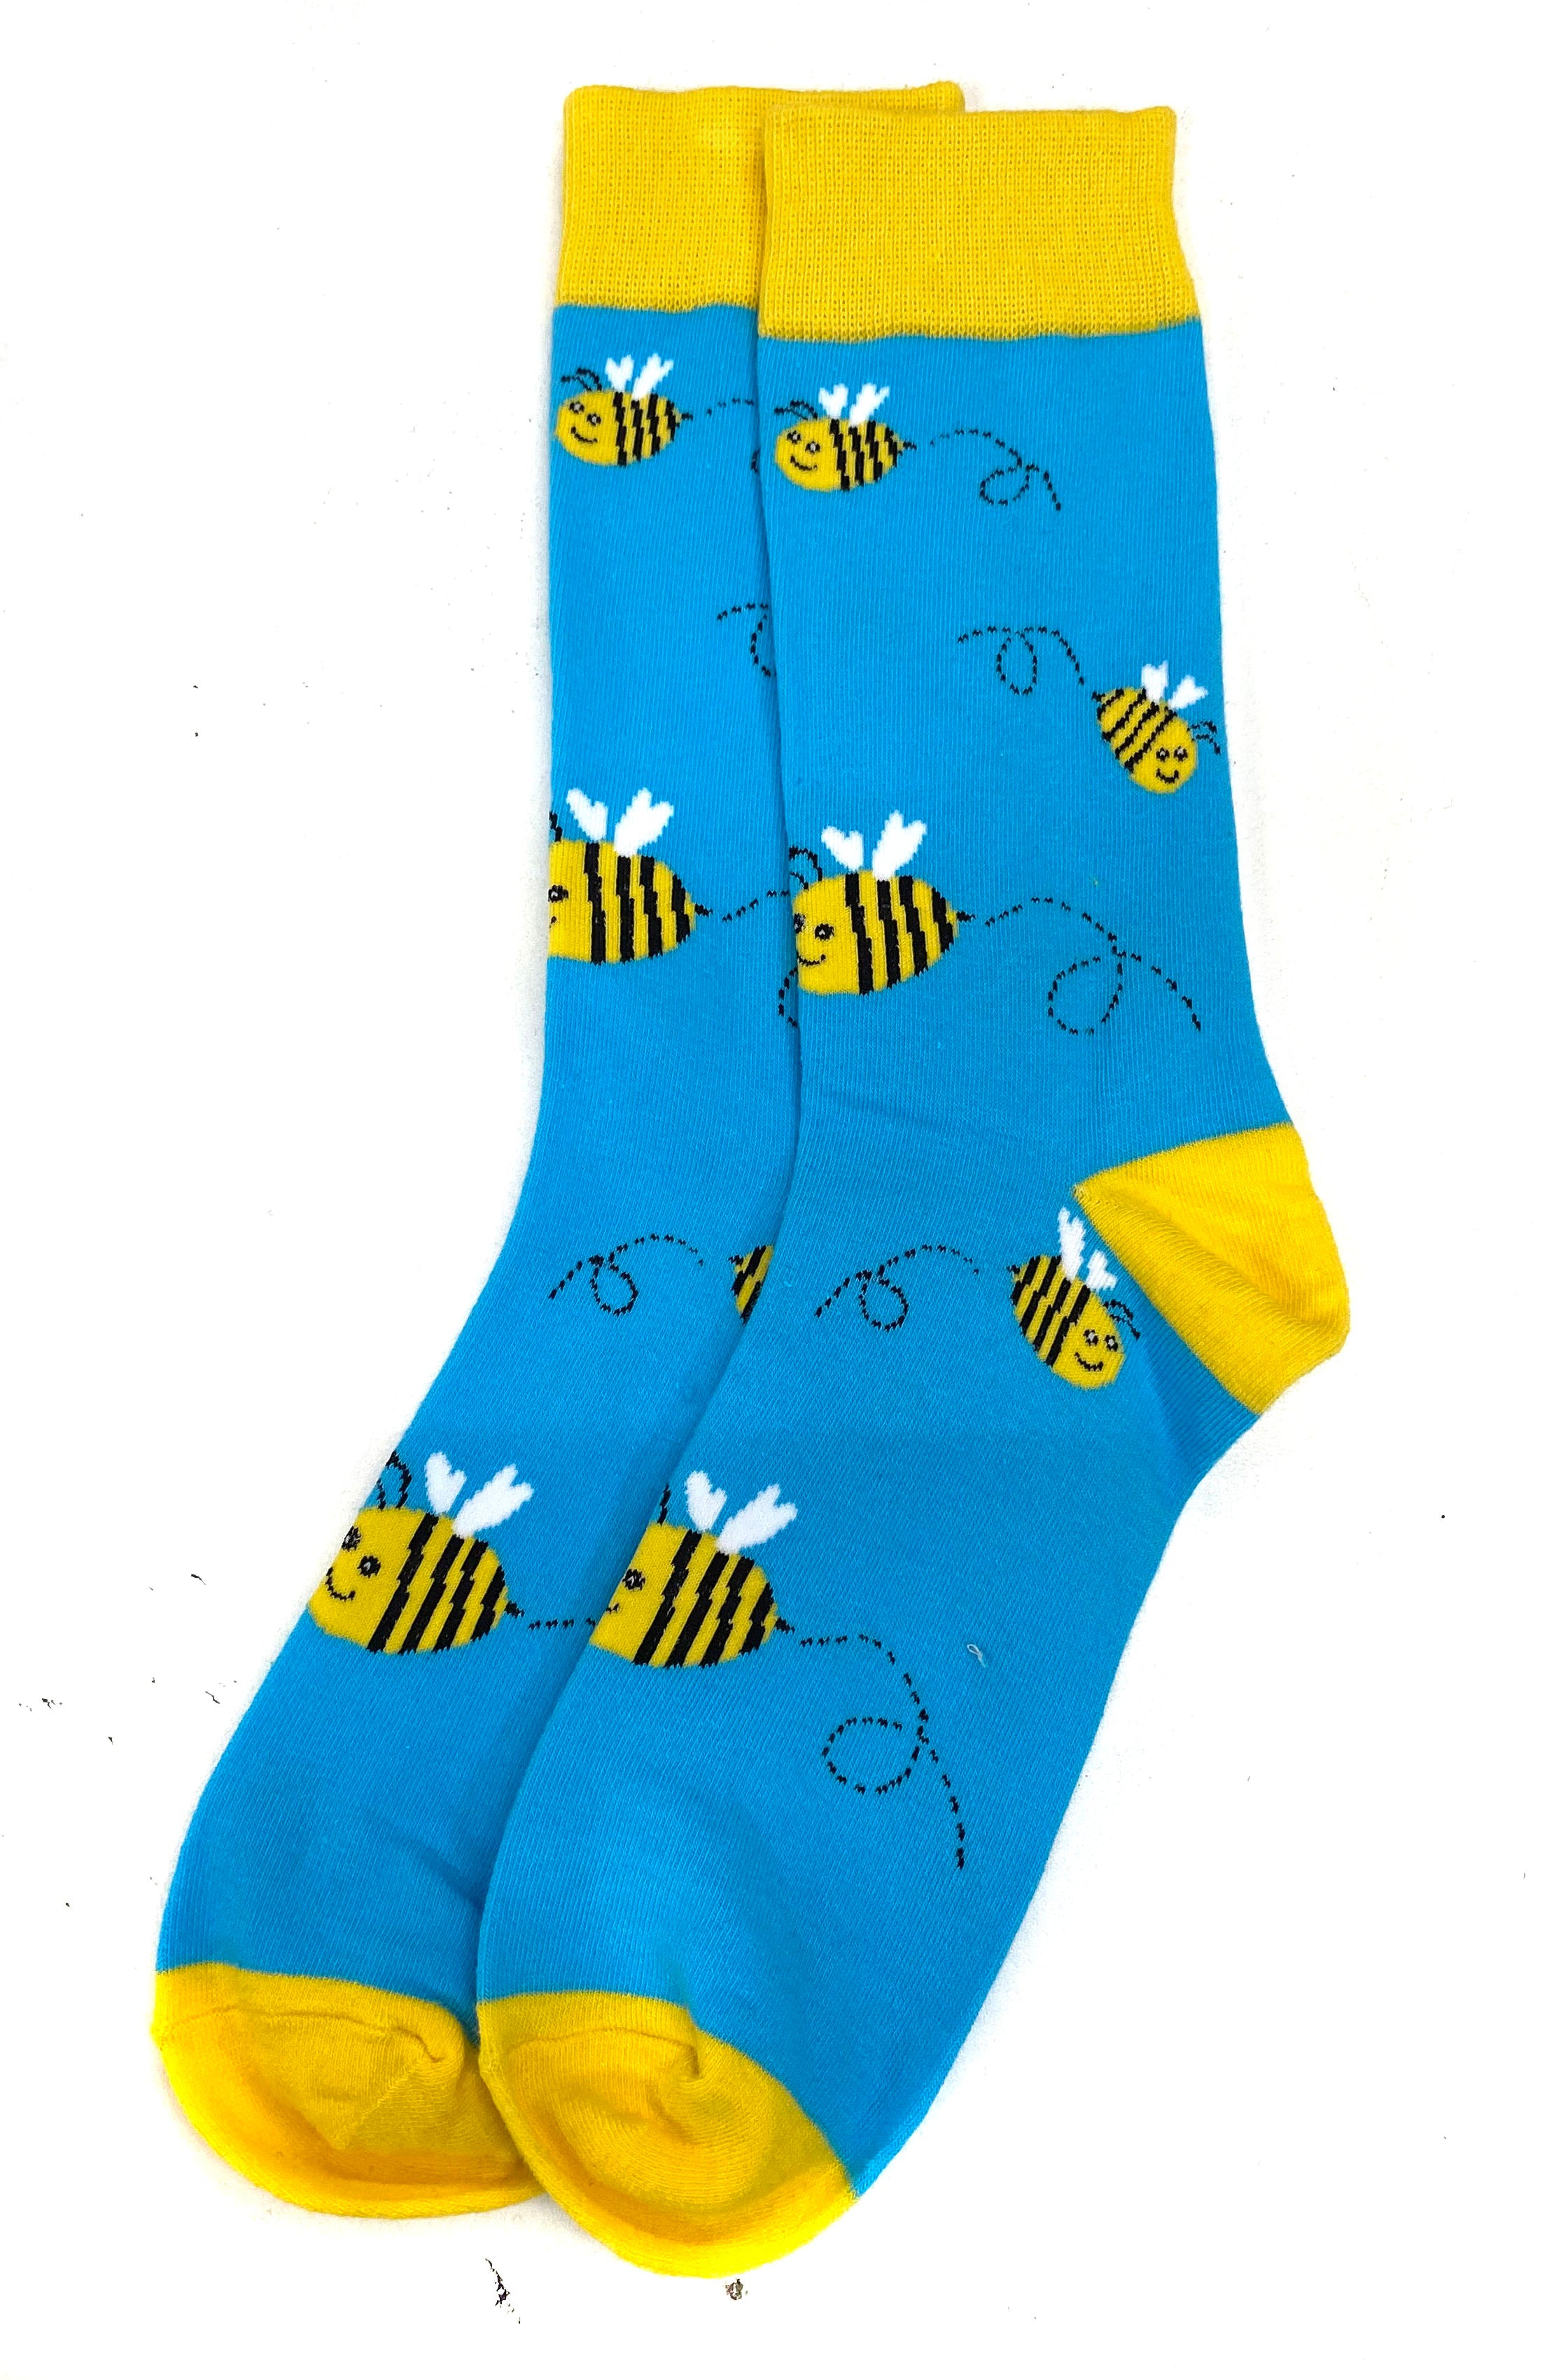 Busy Bee' Socks